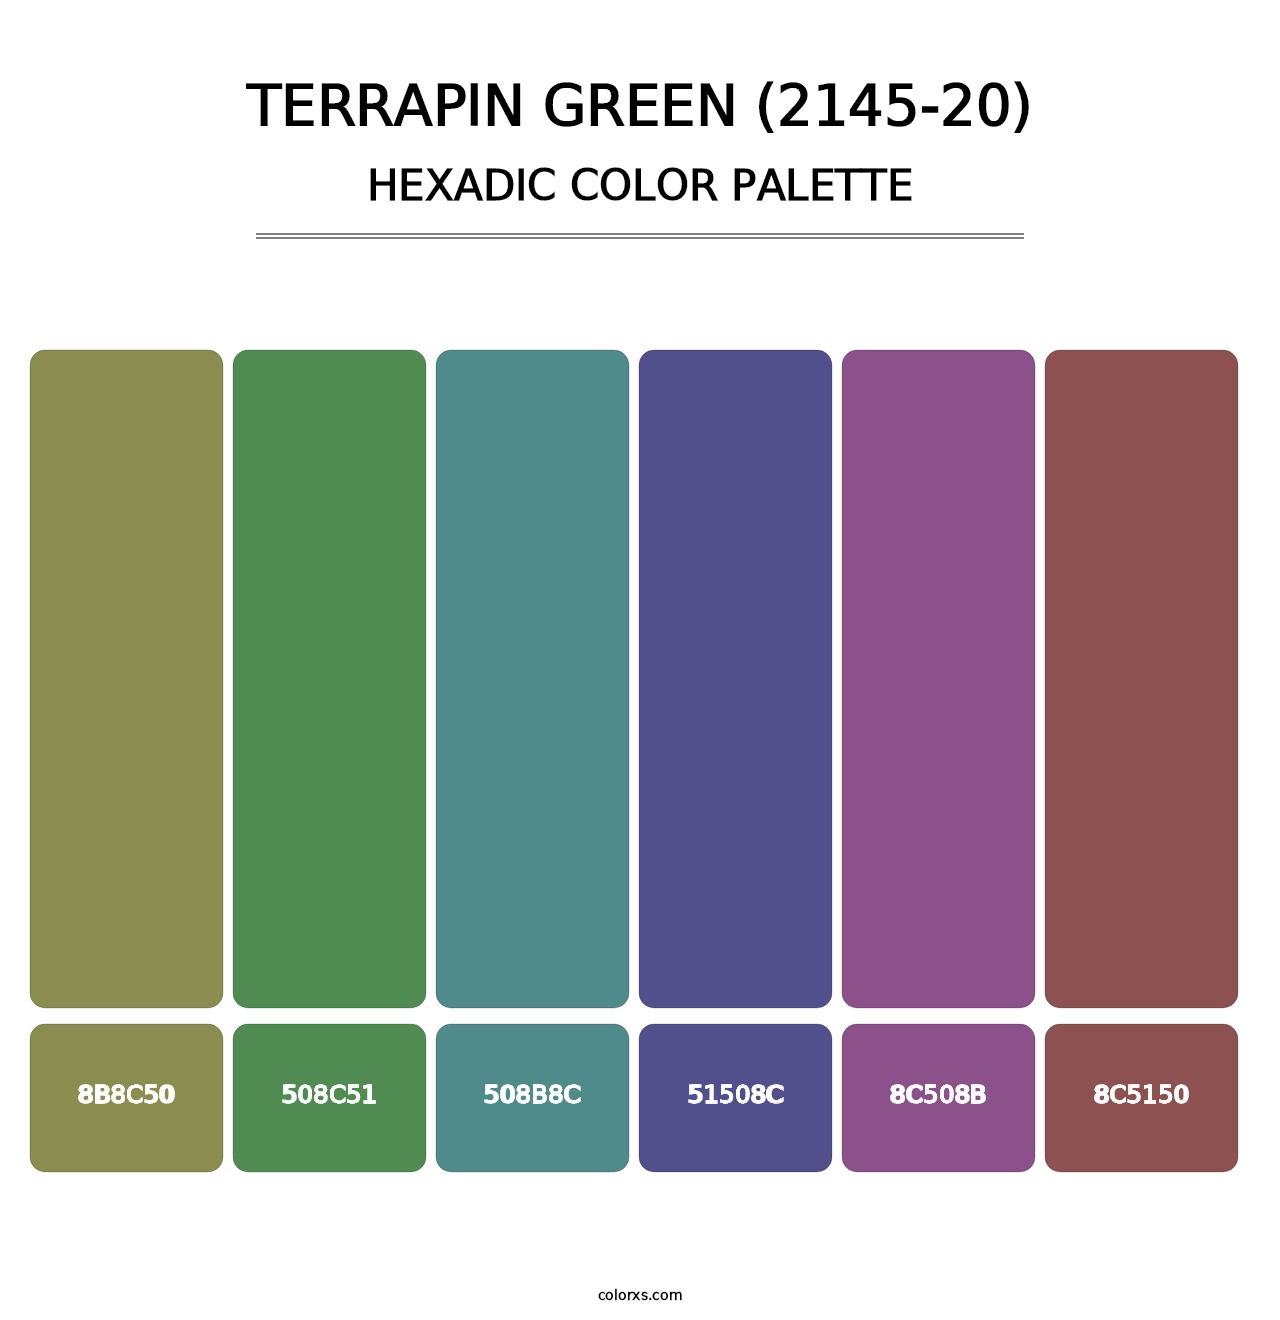 Terrapin Green (2145-20) - Hexadic Color Palette